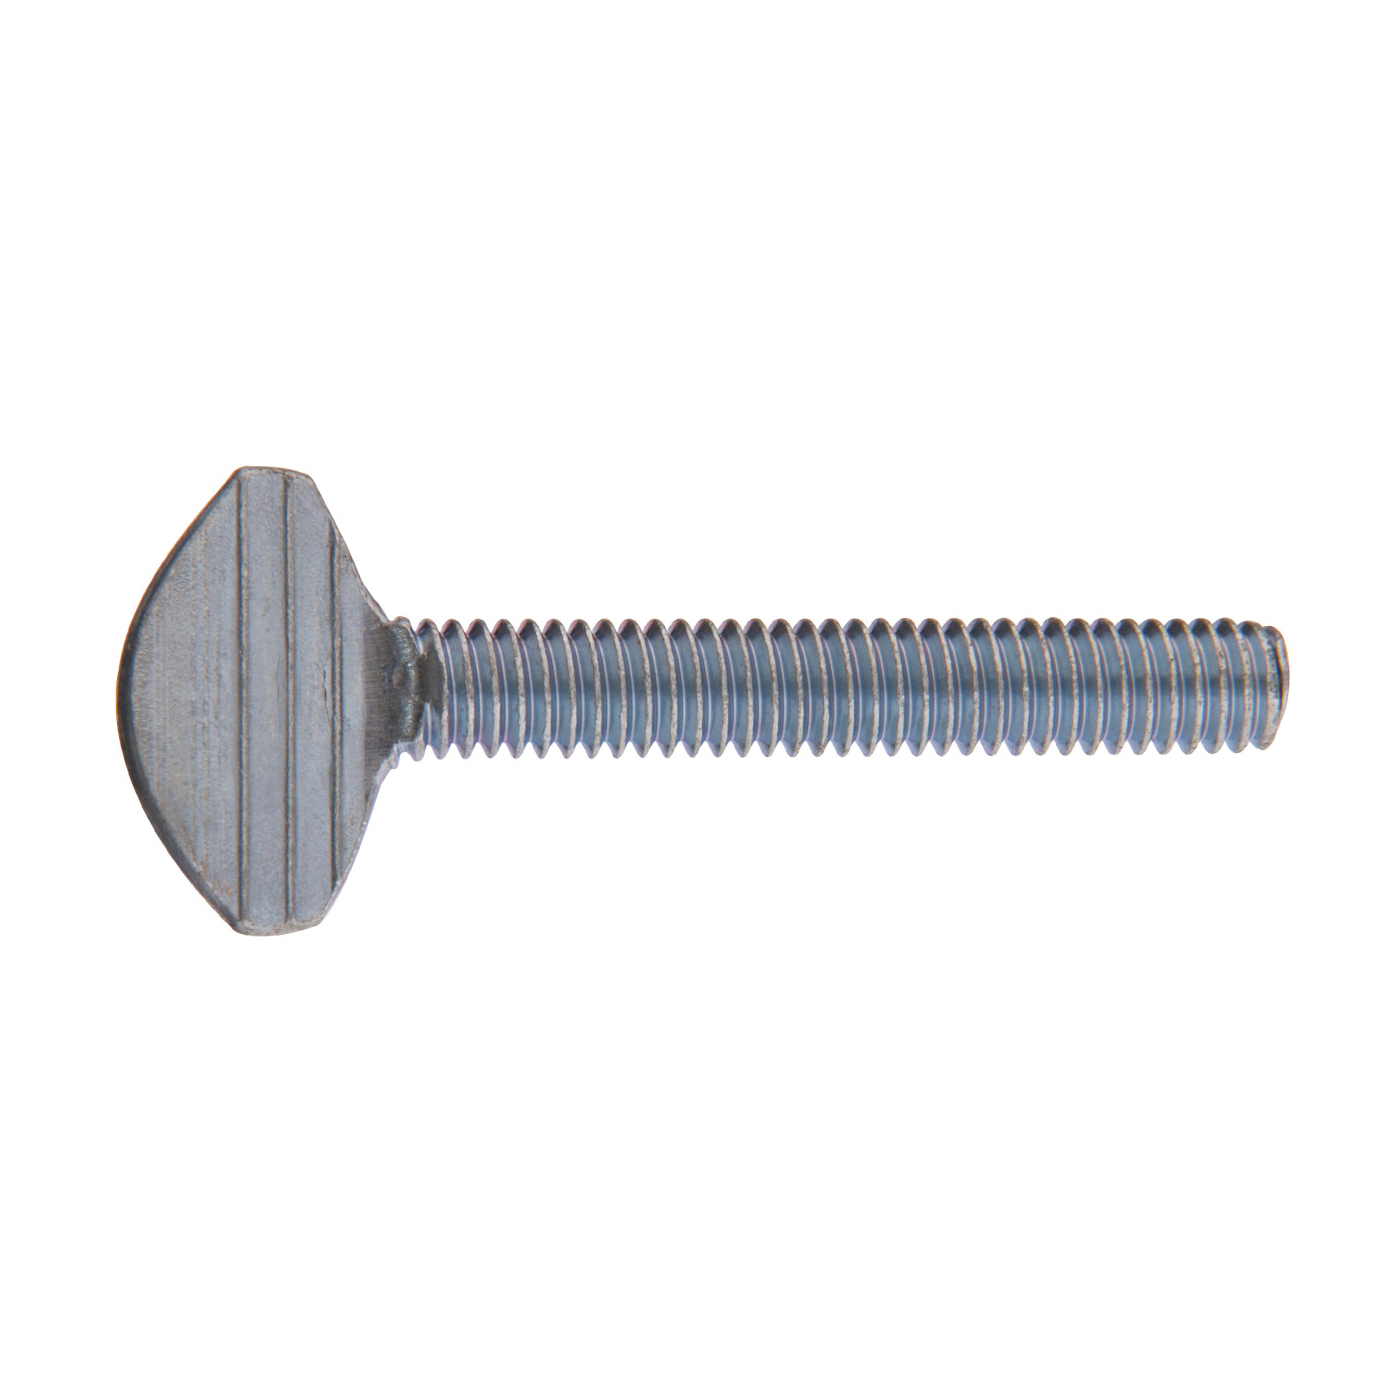 880950 Machine Screw, #10-32 Thread, 2 in L, Steel